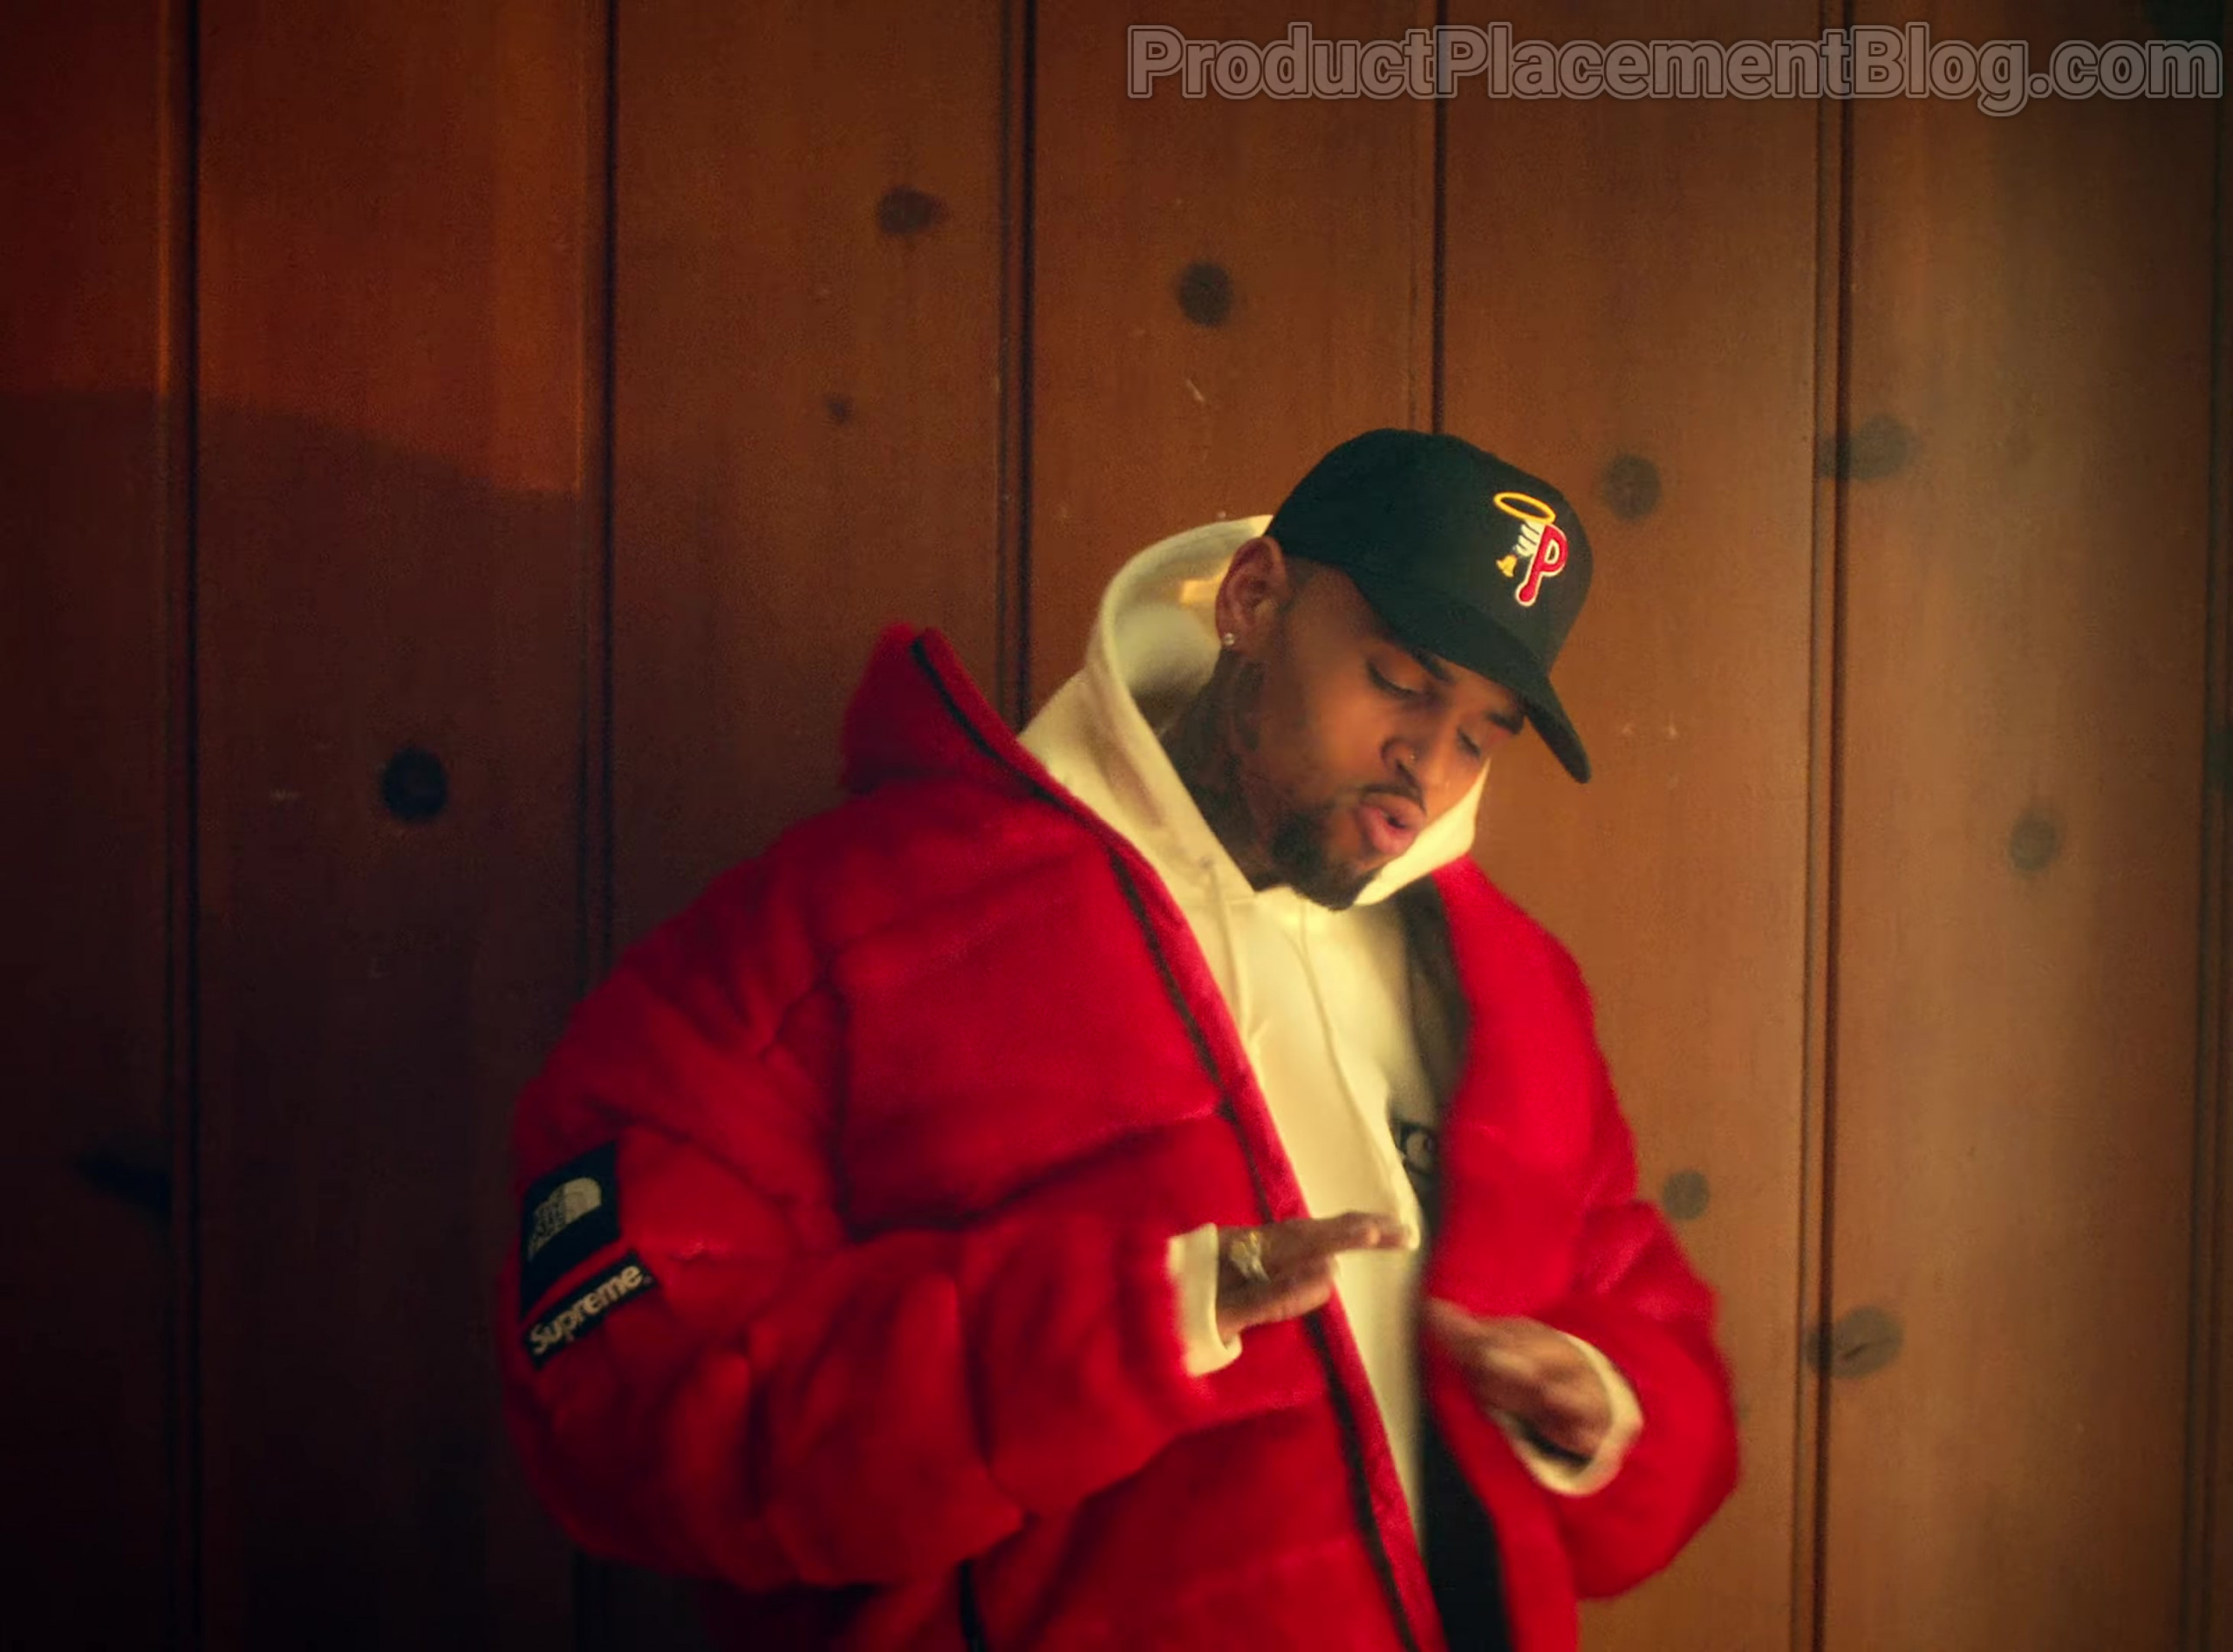 X Supreme Red Jacket Of Chris Brown 